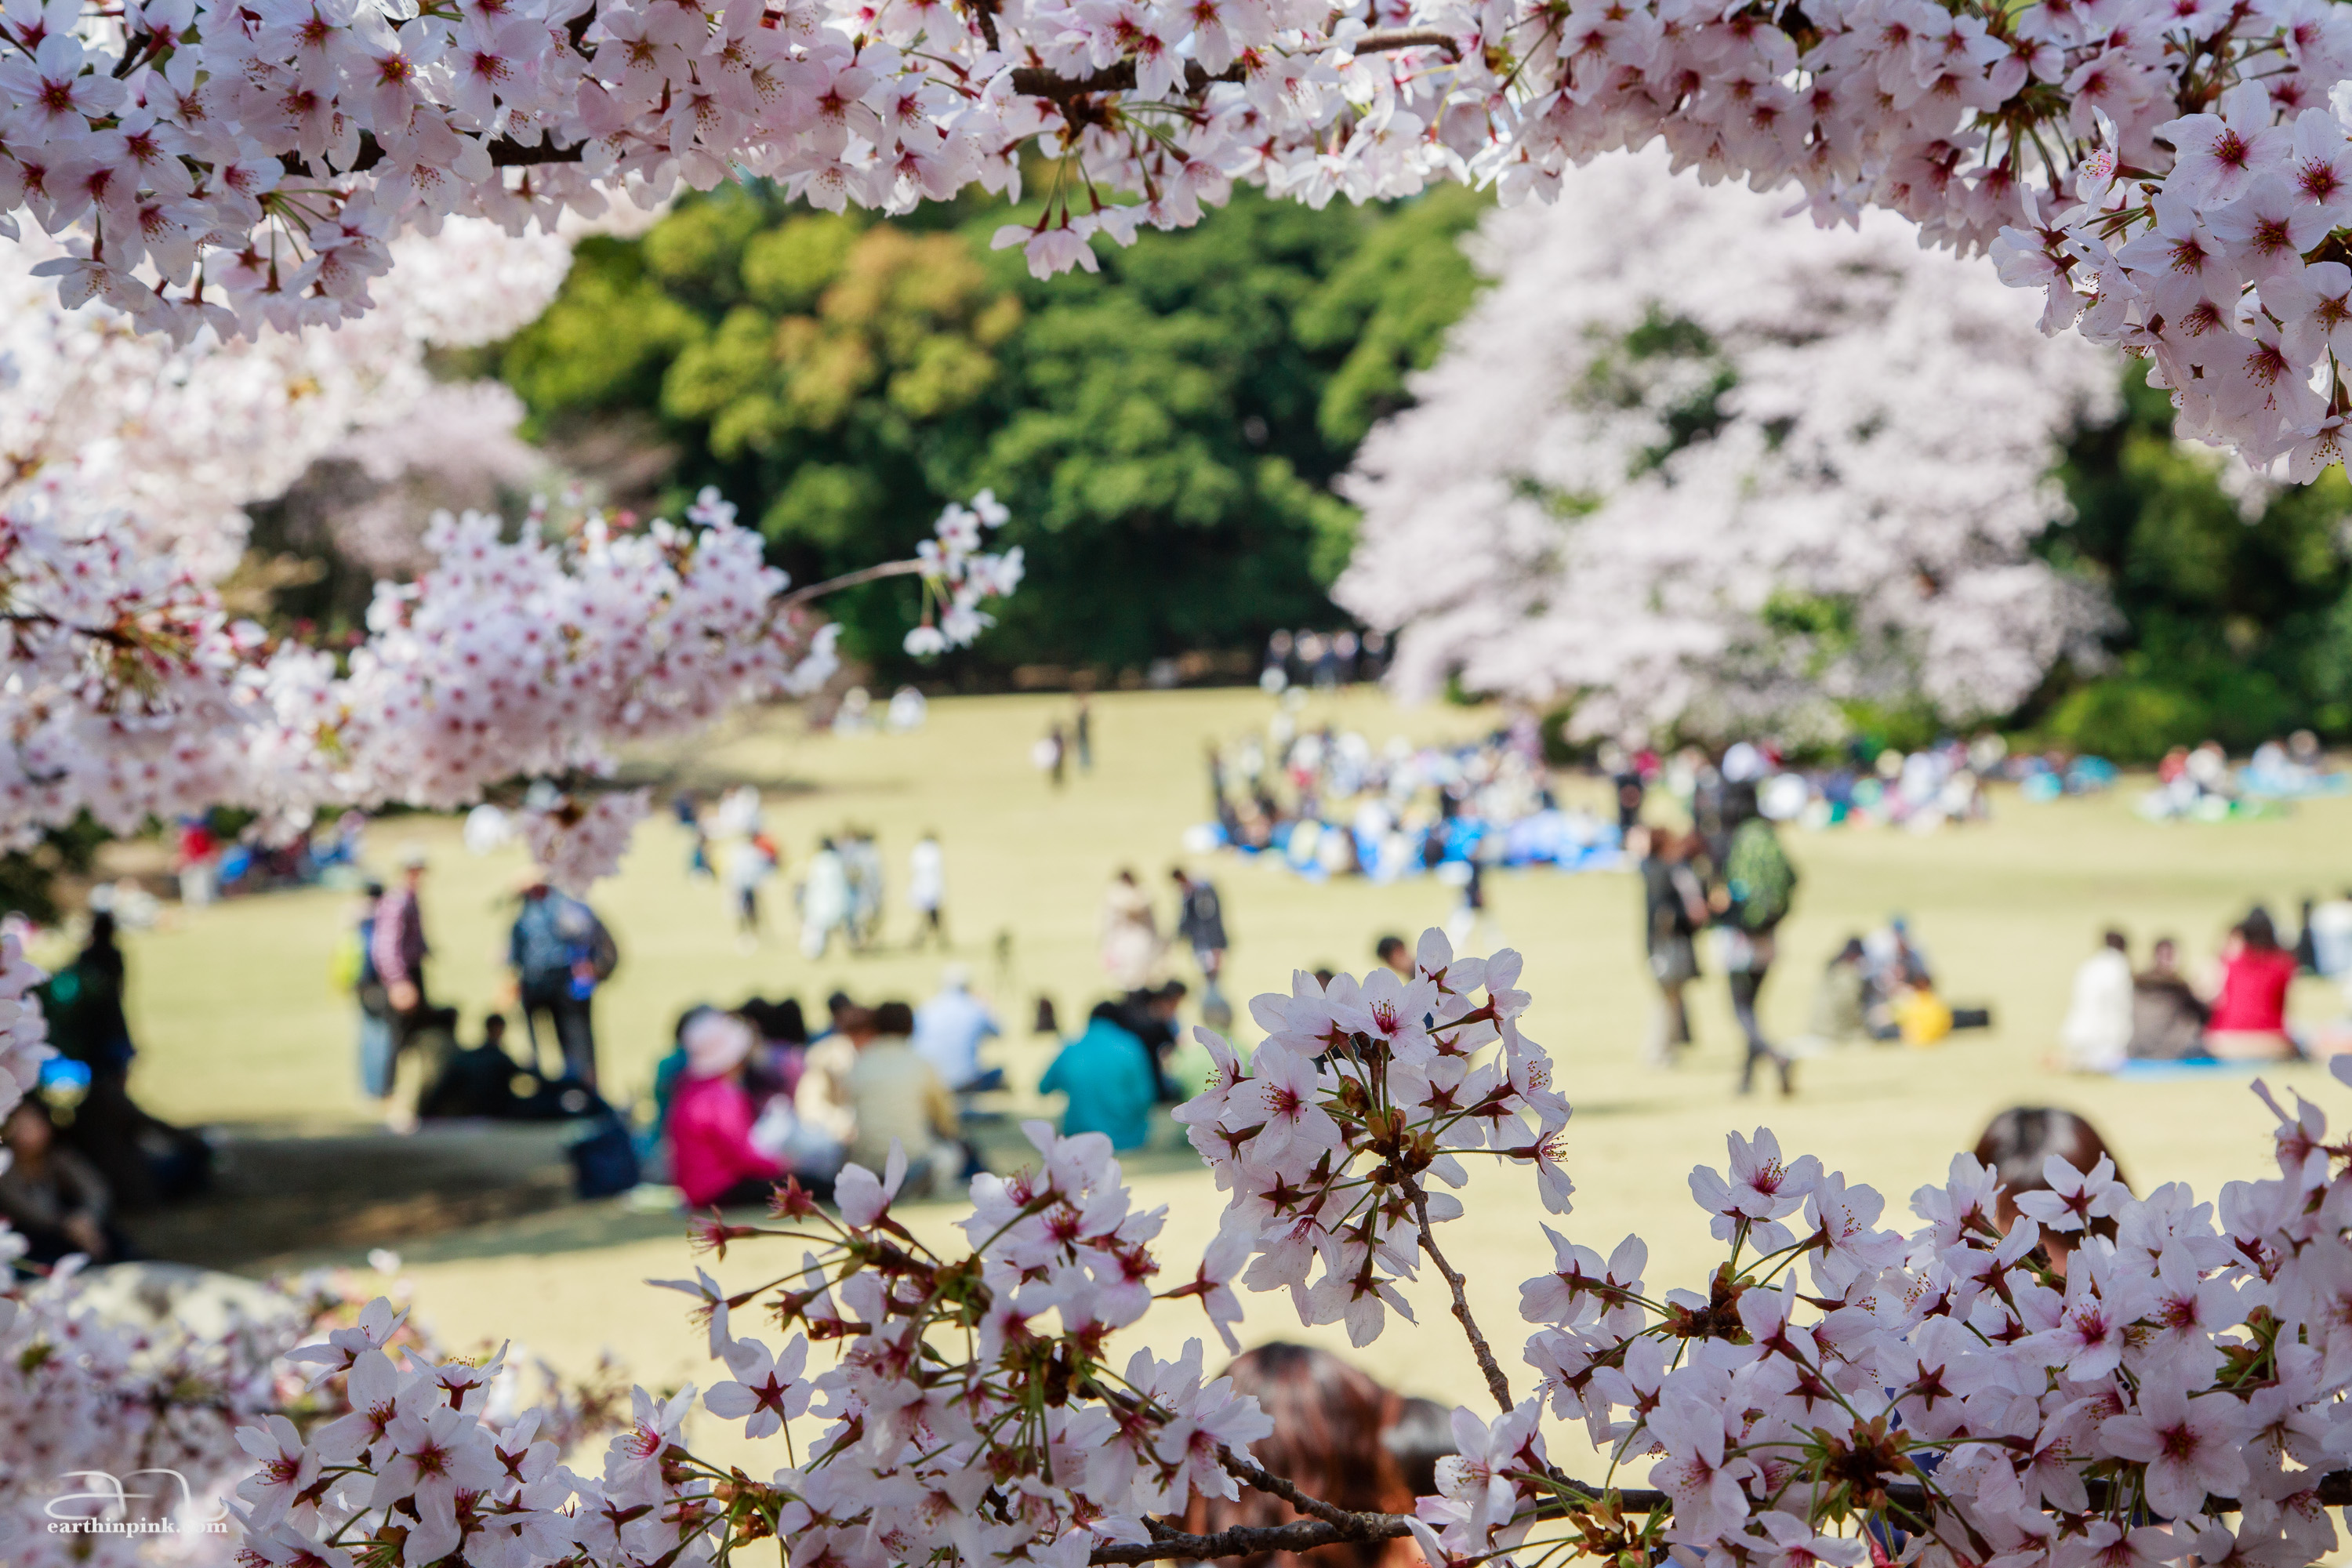 People enjoying the traditional hanami (picnicking under the cherry trees) in Shinjuku Gyoen